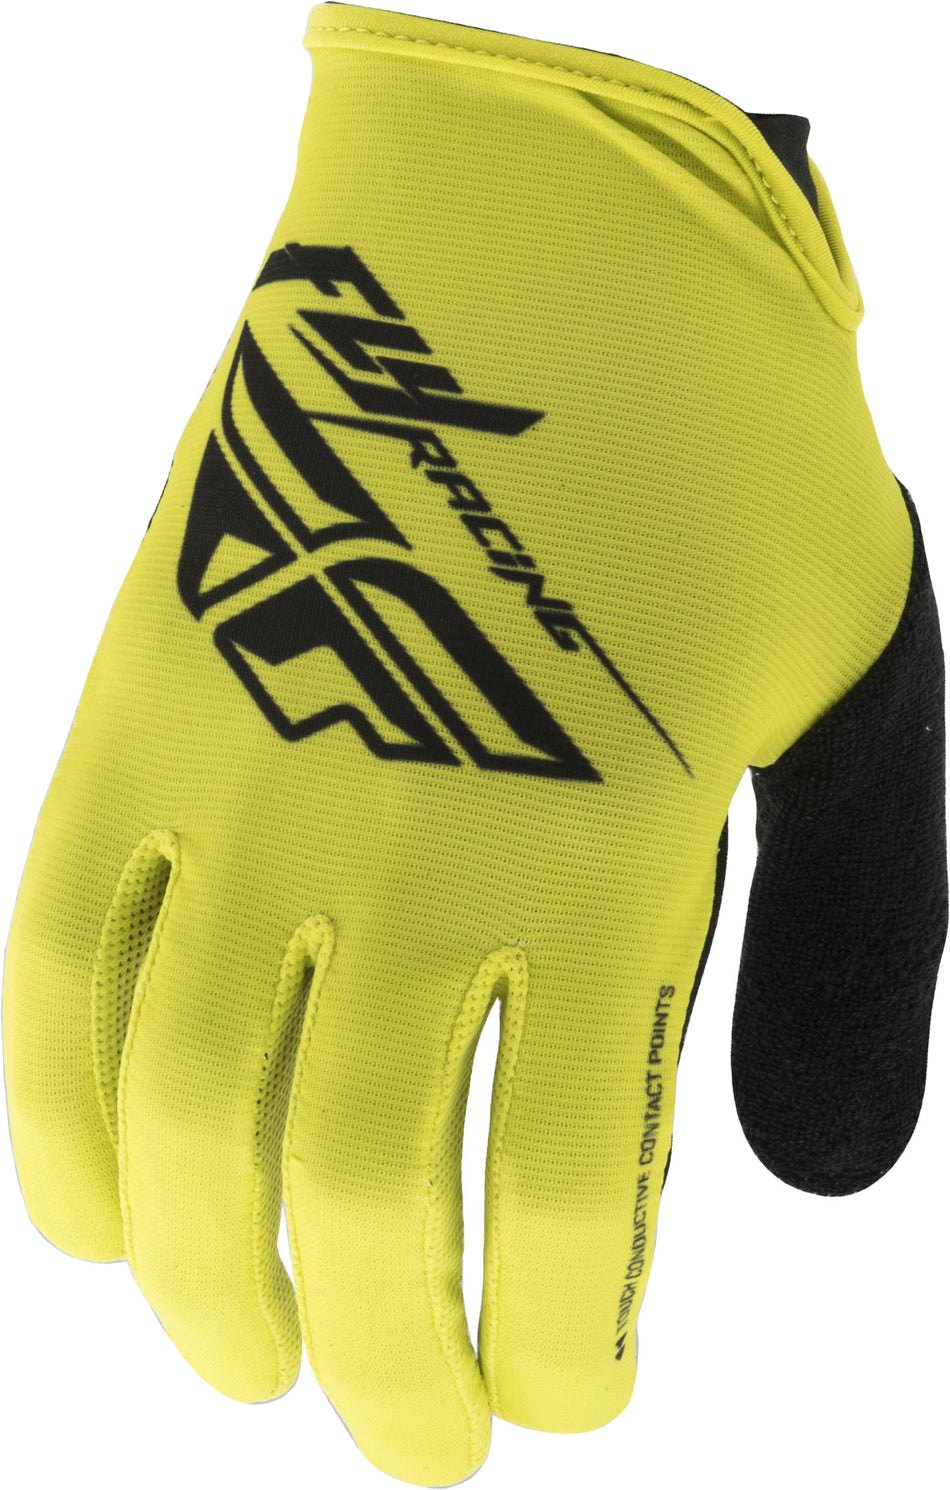 FLY RACING Media Gloves Lime/Black Sz 12 350-09512